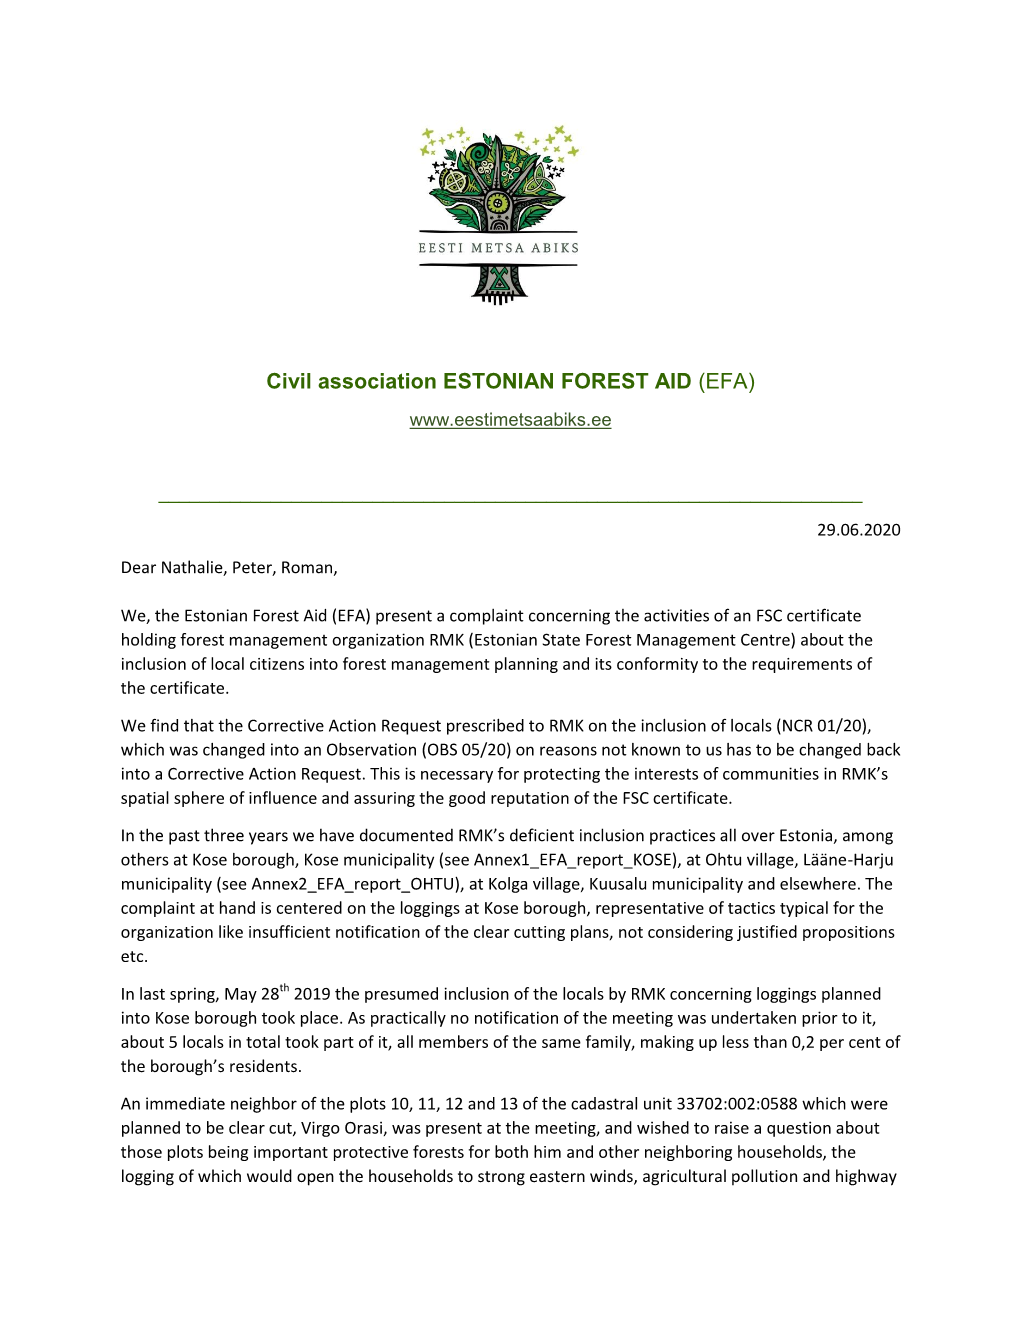 Civil Association ESTONIAN FOREST AID (EFA)